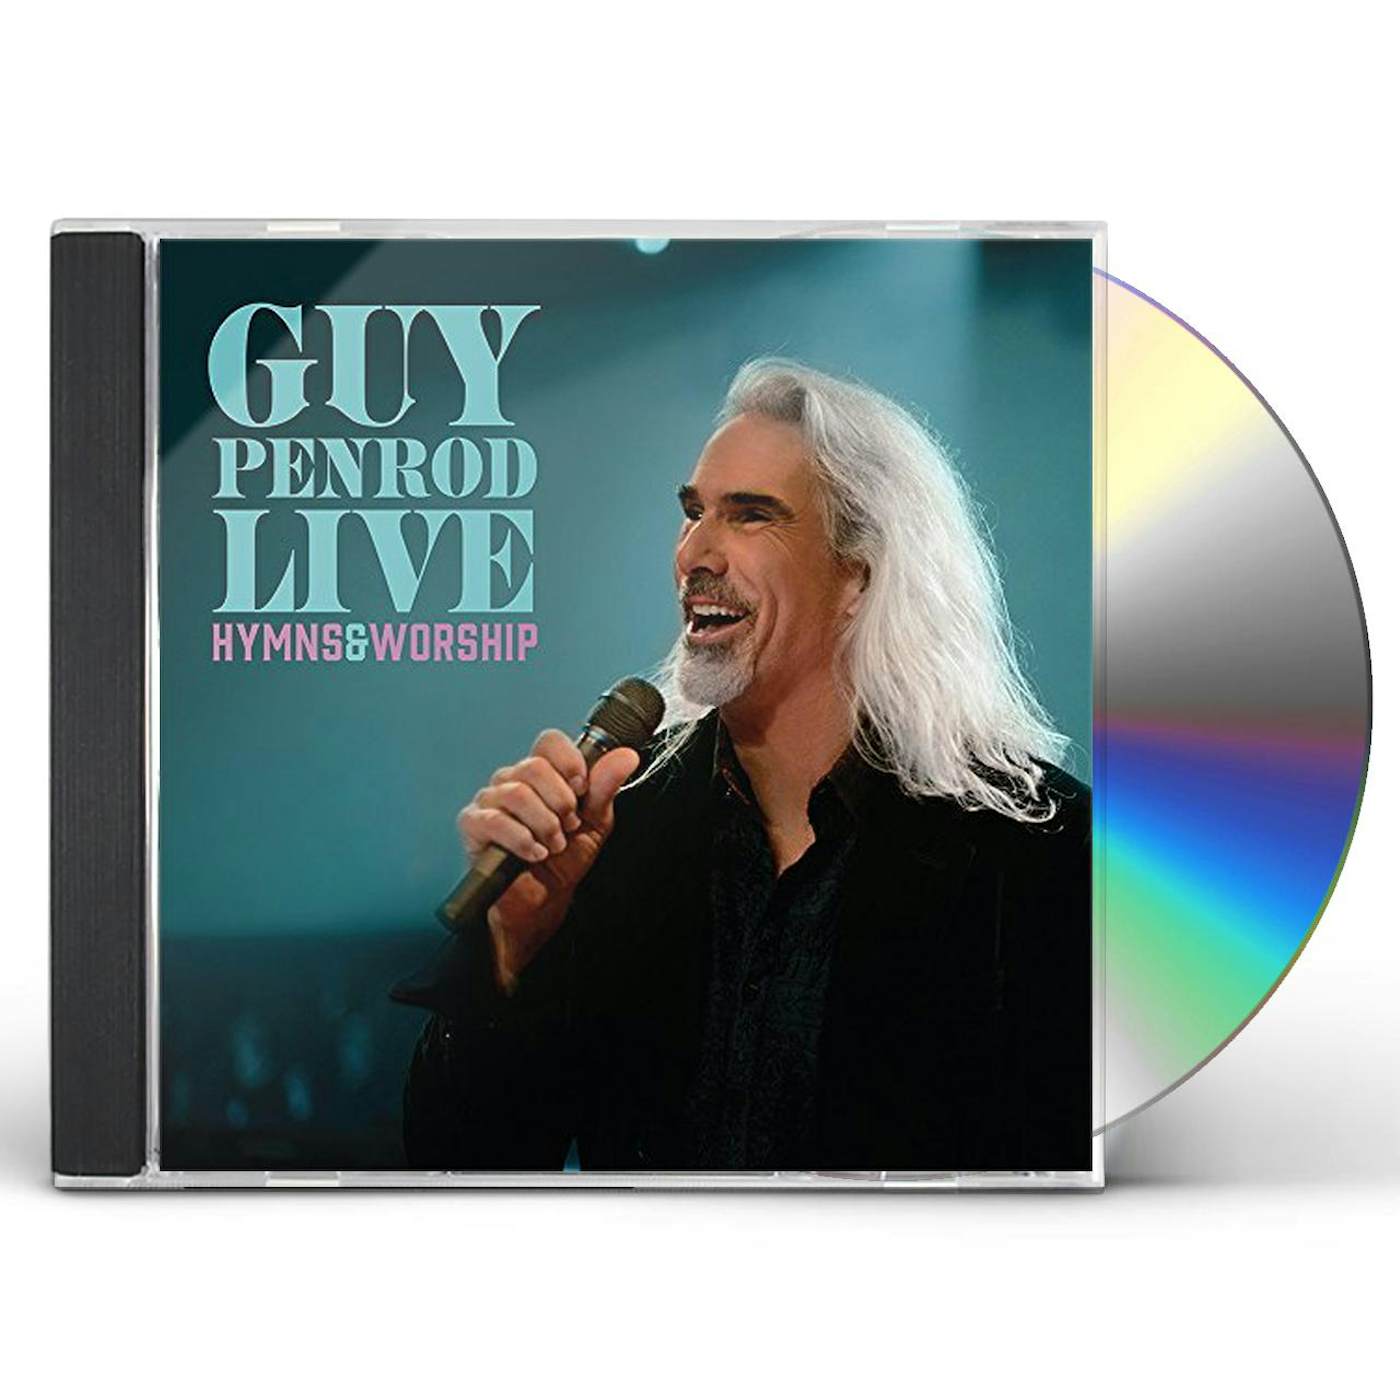 Guy Penrod LIVE: HYMNS & WORSHIP CD